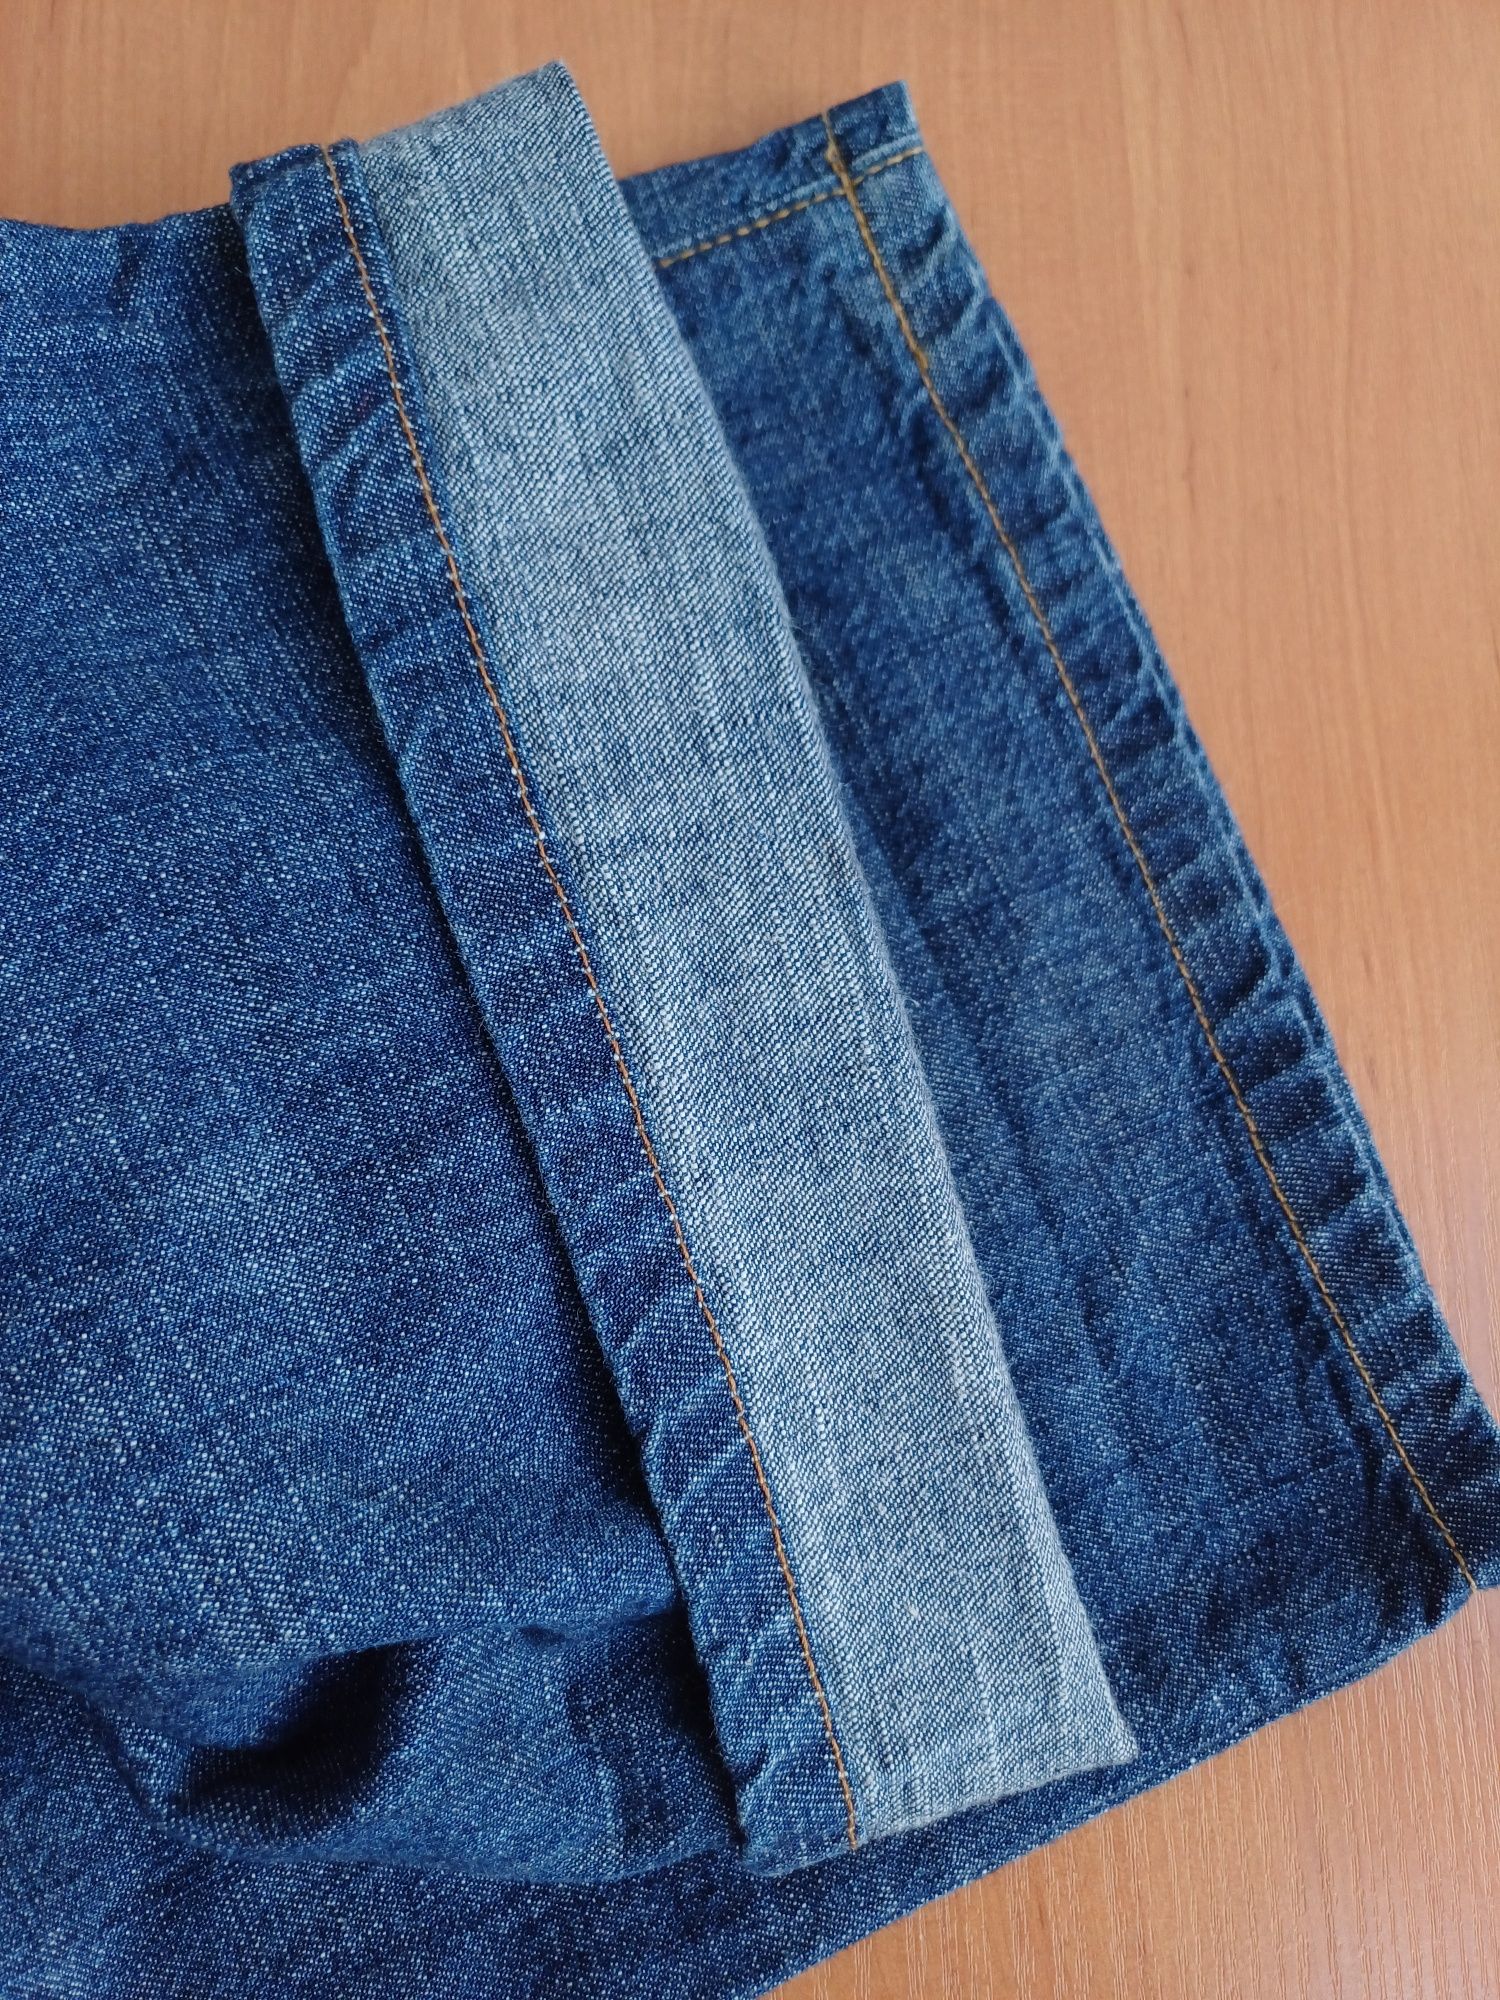 Легкие широкие джинсы RIFLE (оригинал)made in Italy 34×34 размер